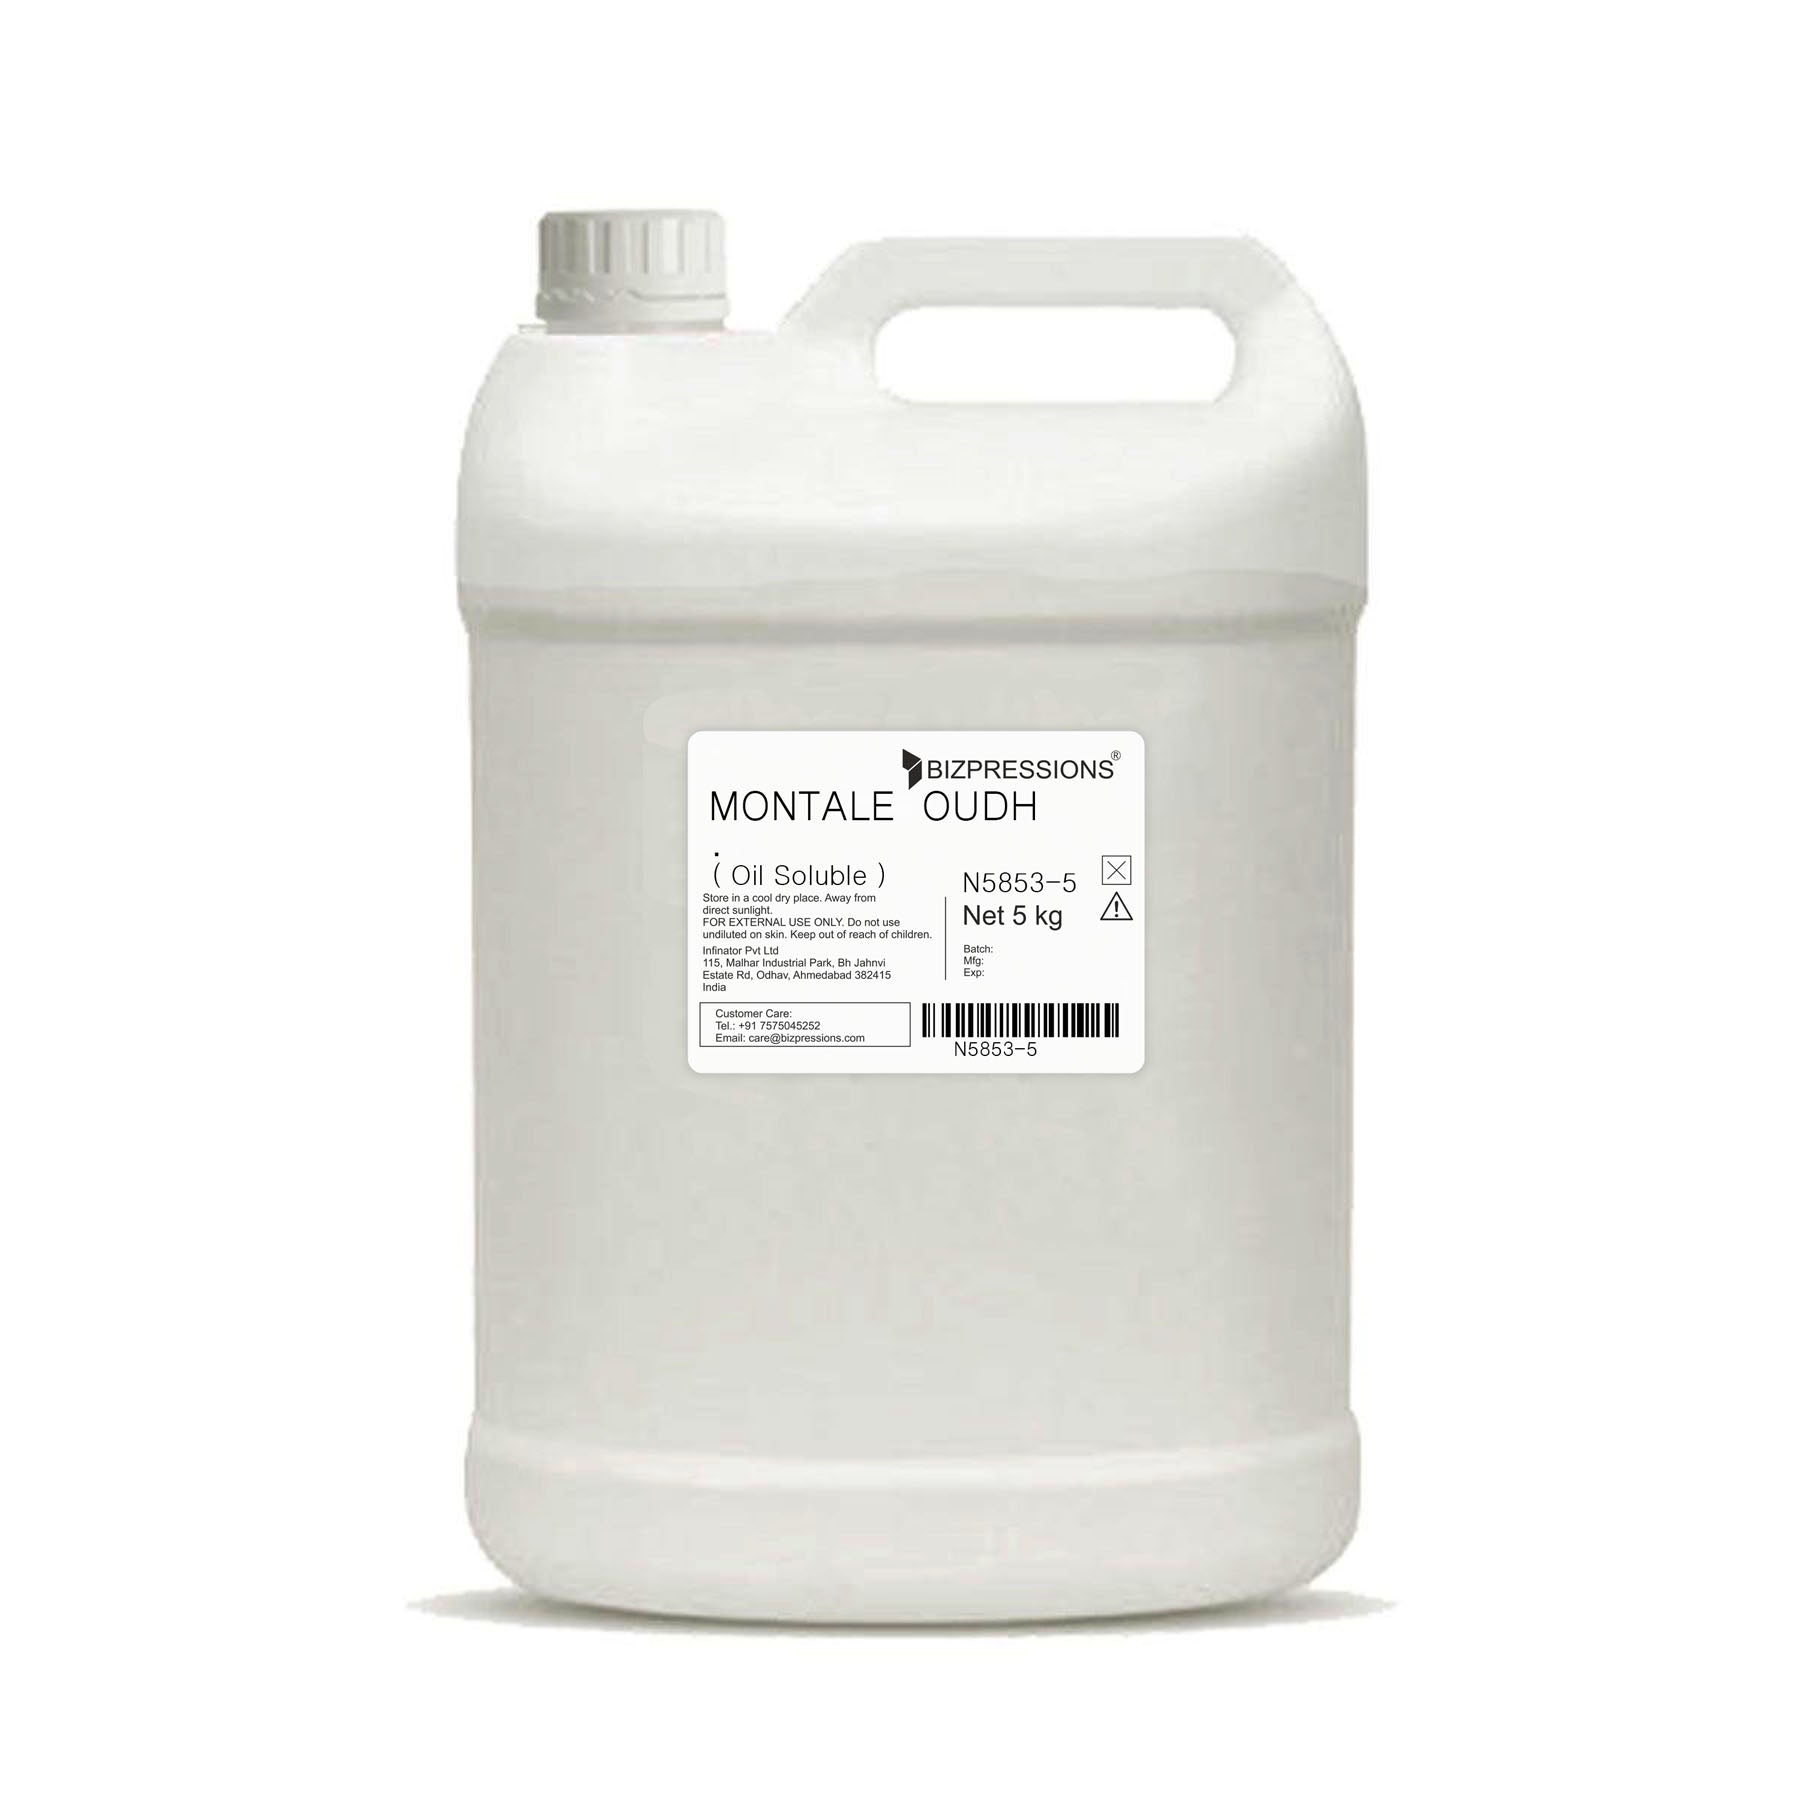 MONTALE OUDH - Fragrance ( Oil Soluble ) - 5 kg